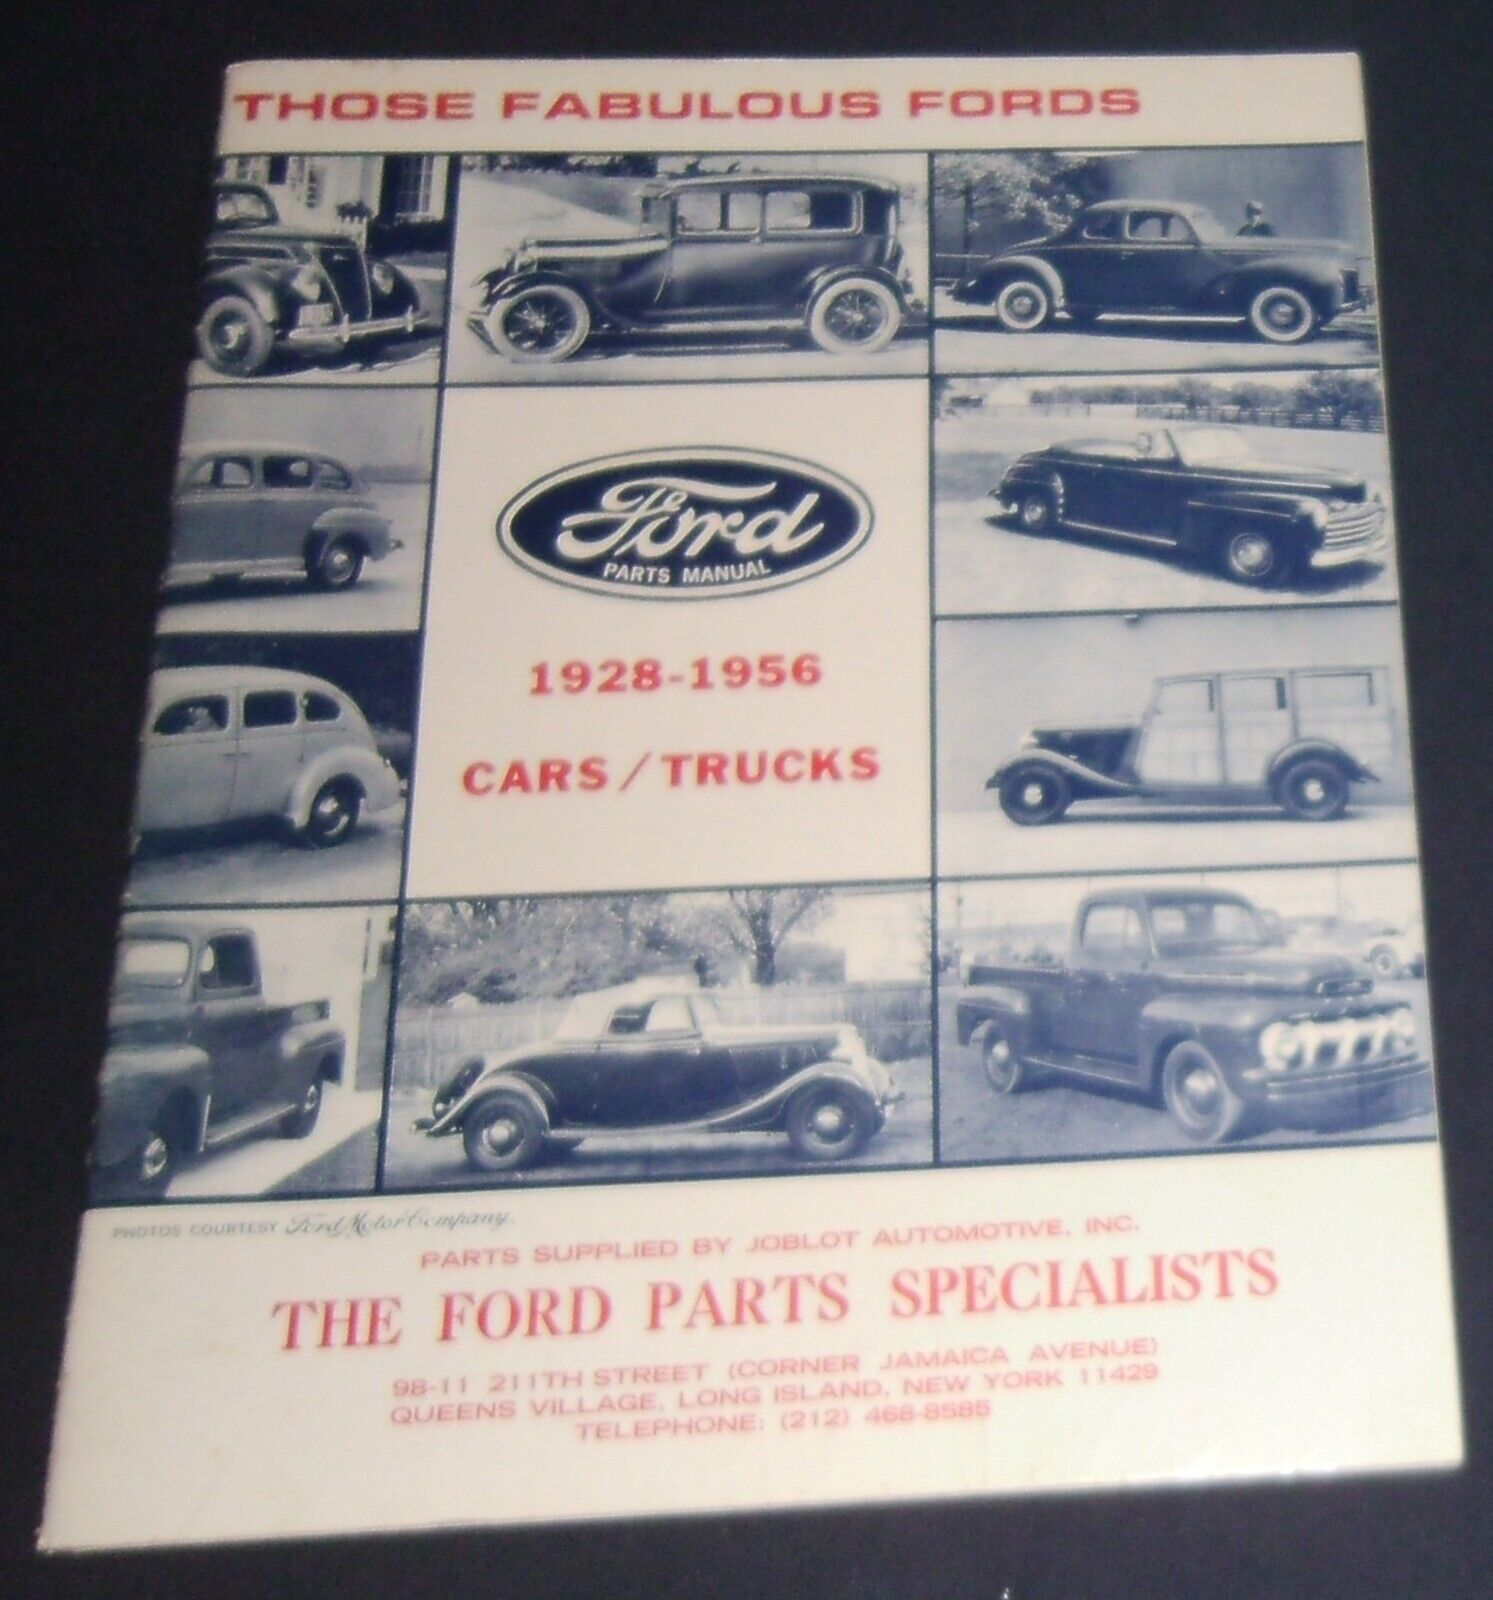 Those Fabulous Fords 1928-1956 Parts Manual Cars / Trucks Joblot Automotive Inc.